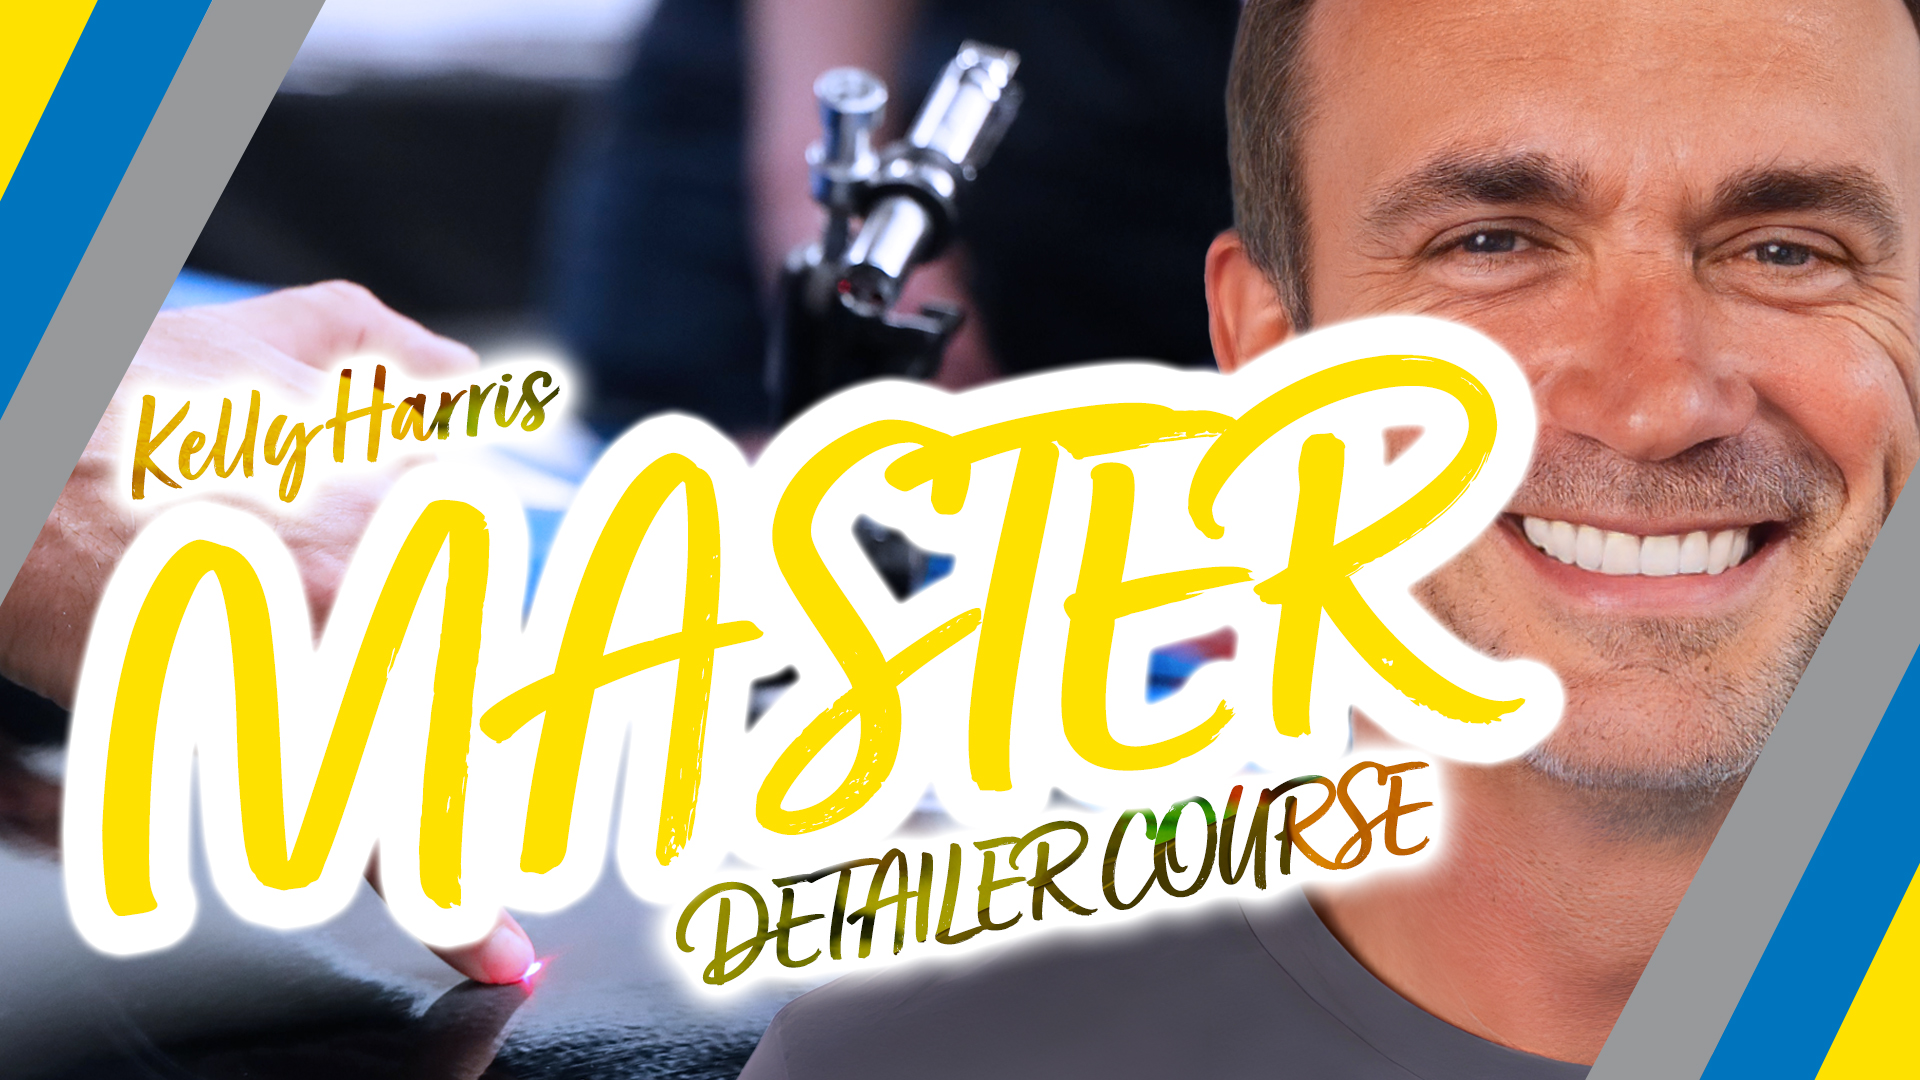 Master Detailer Course w/ Kelly Harris